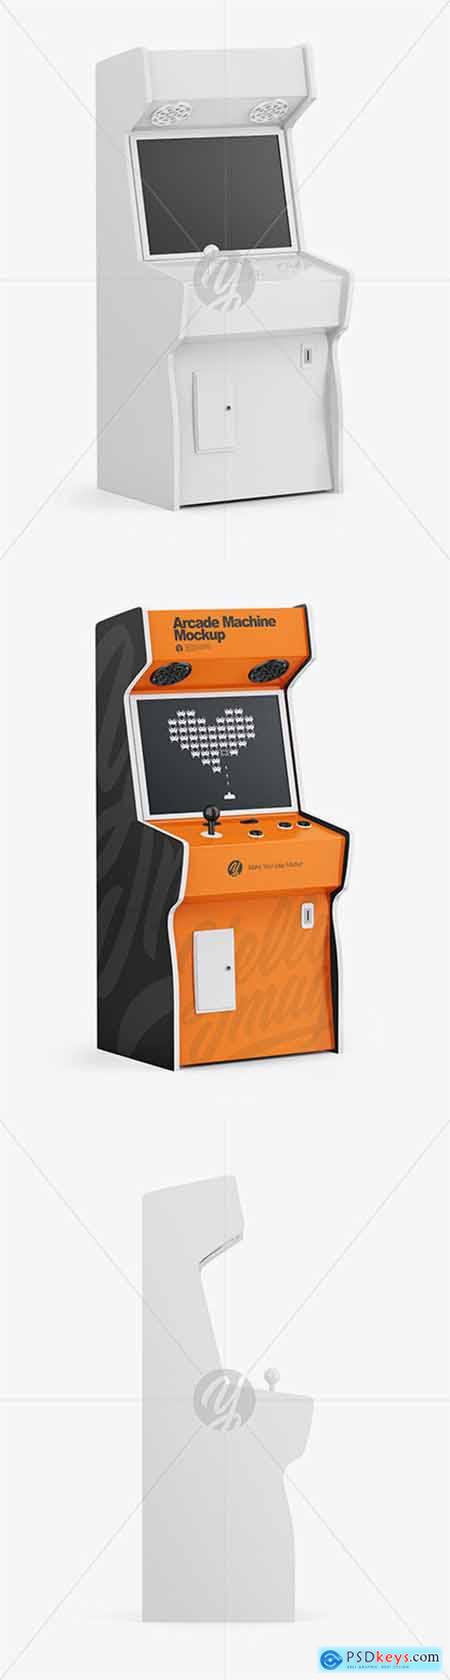 Arcade Machine Mockup 65198